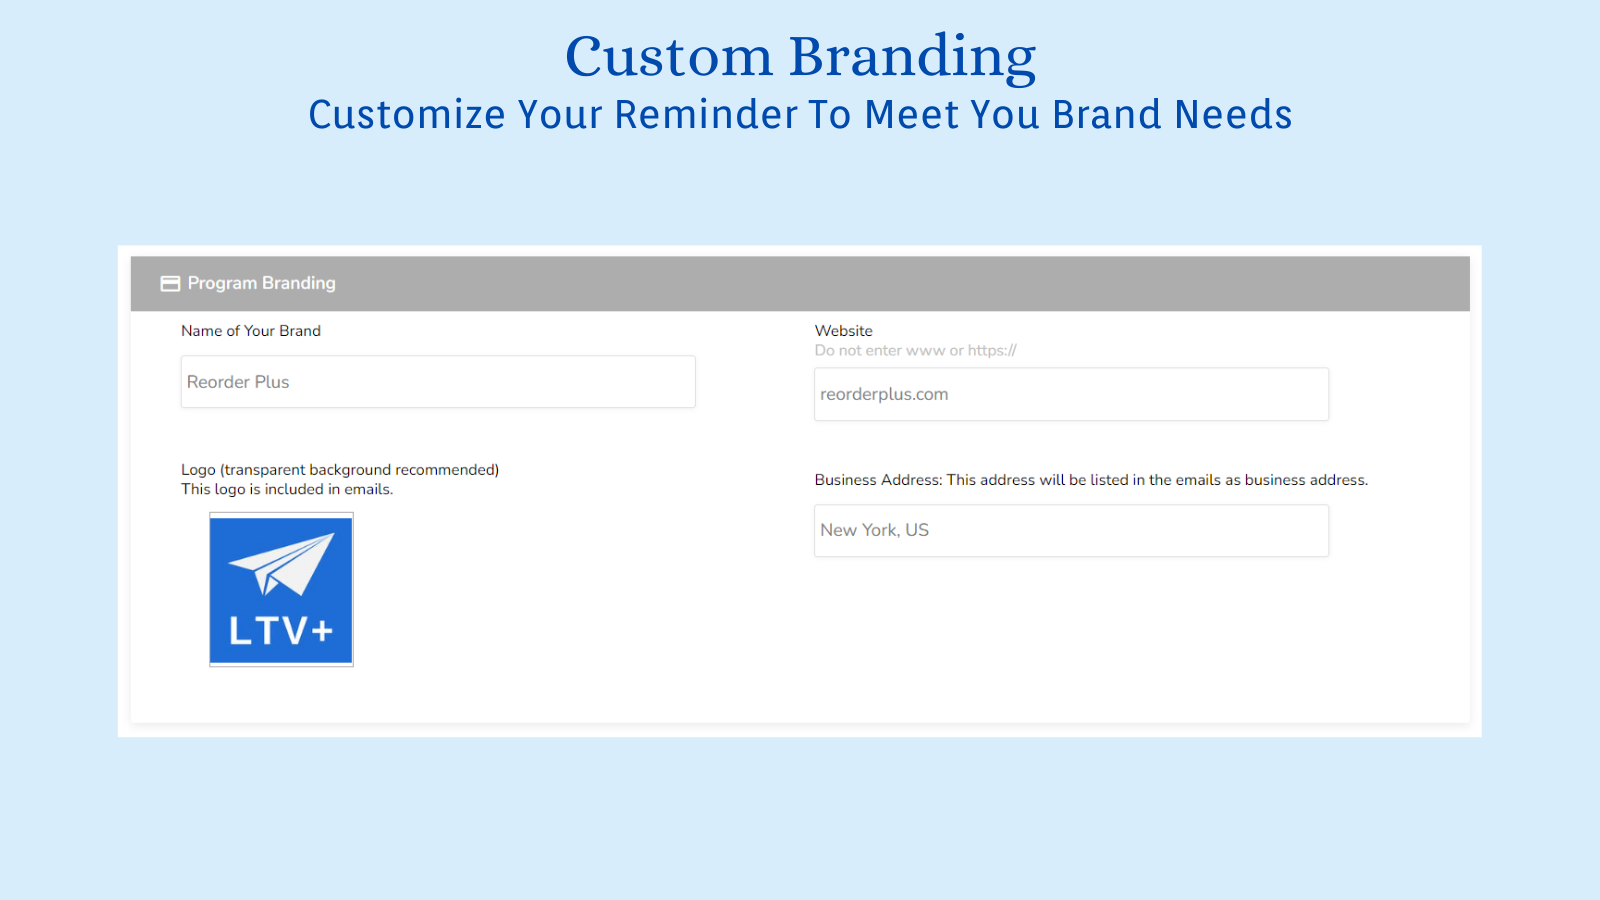 Customize To Meet Your Brand Needs